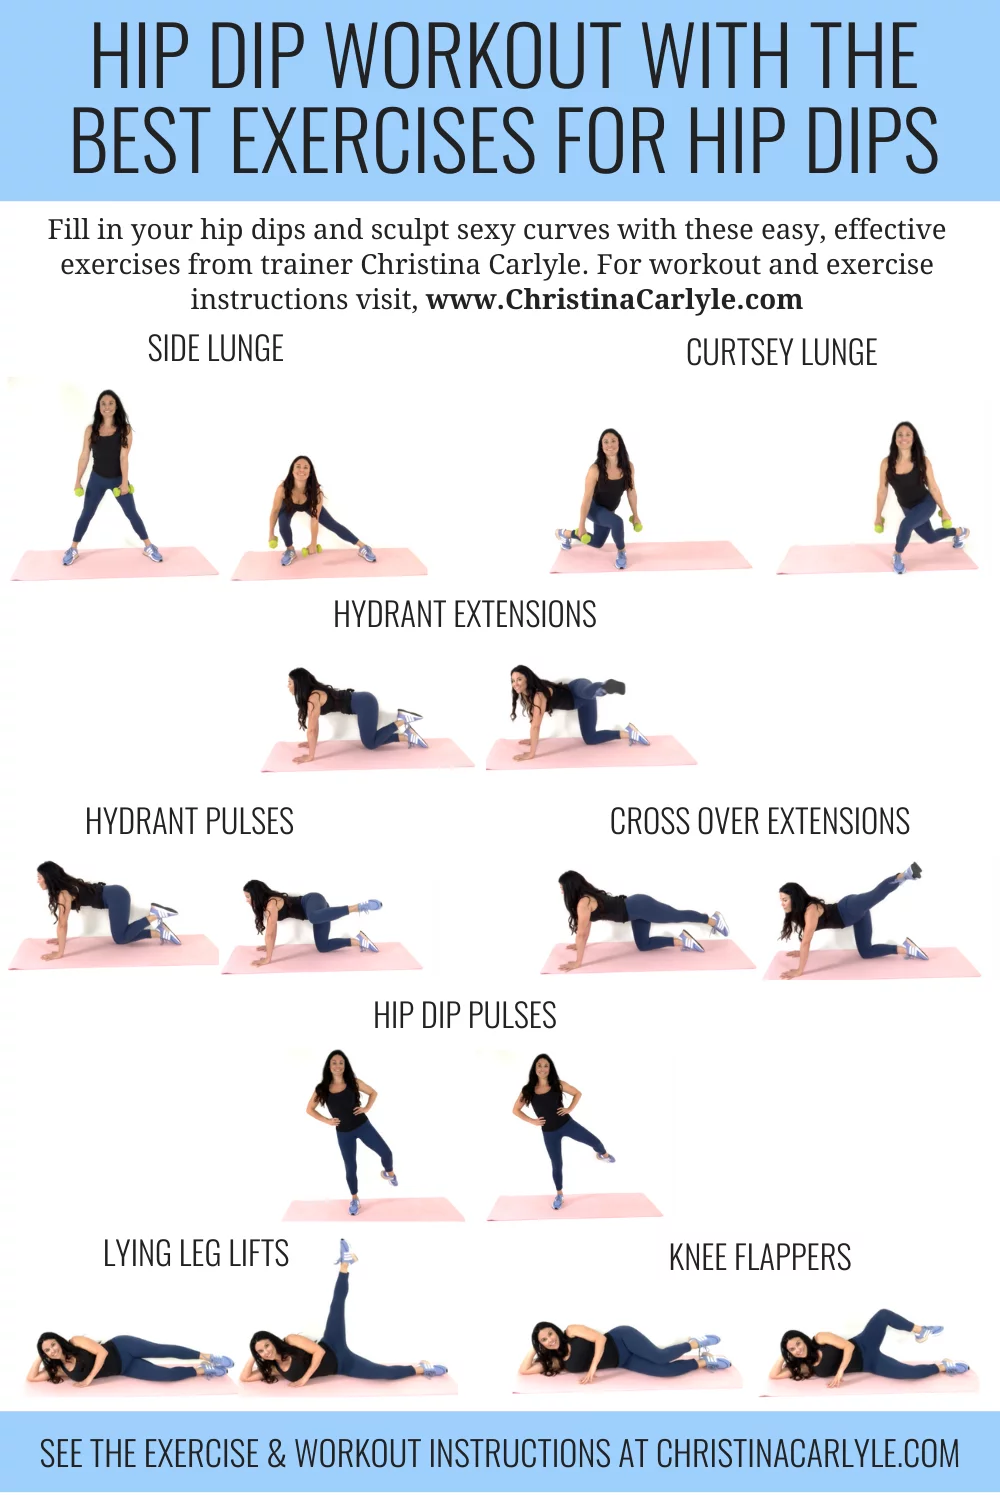 Five exercises to improve your hip dips - Tribune Online